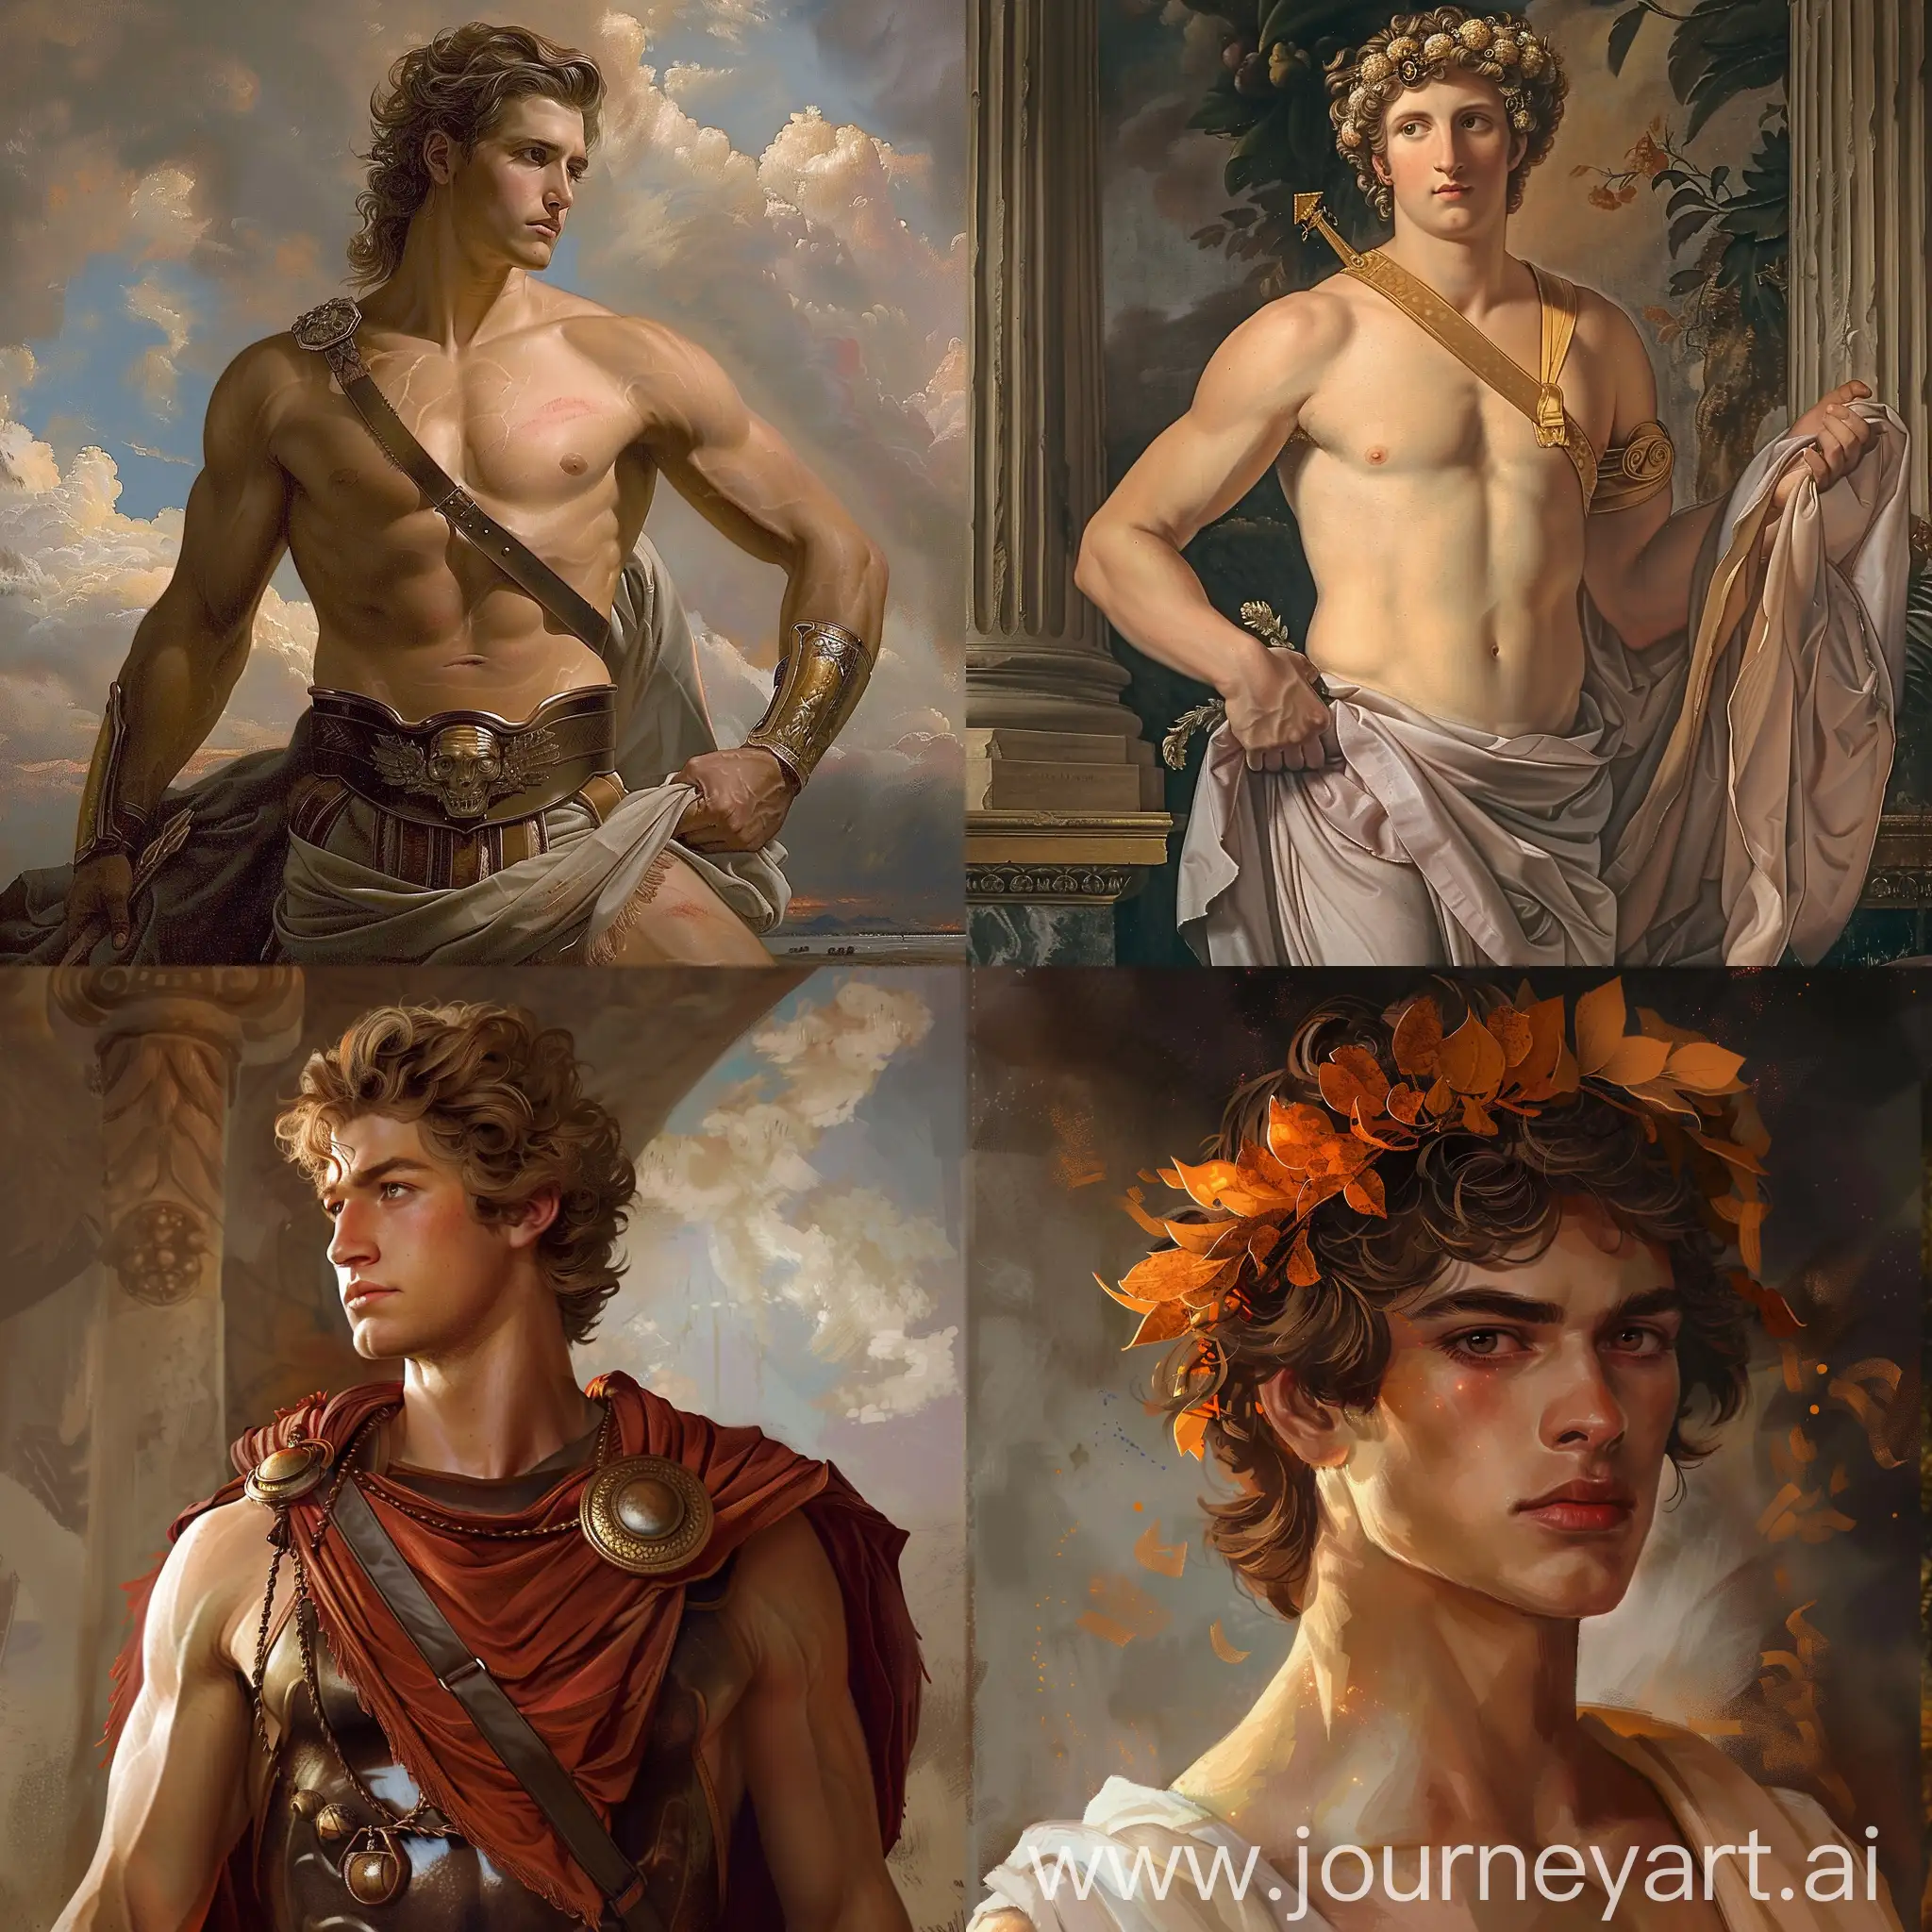 Apollo, hot Greek god